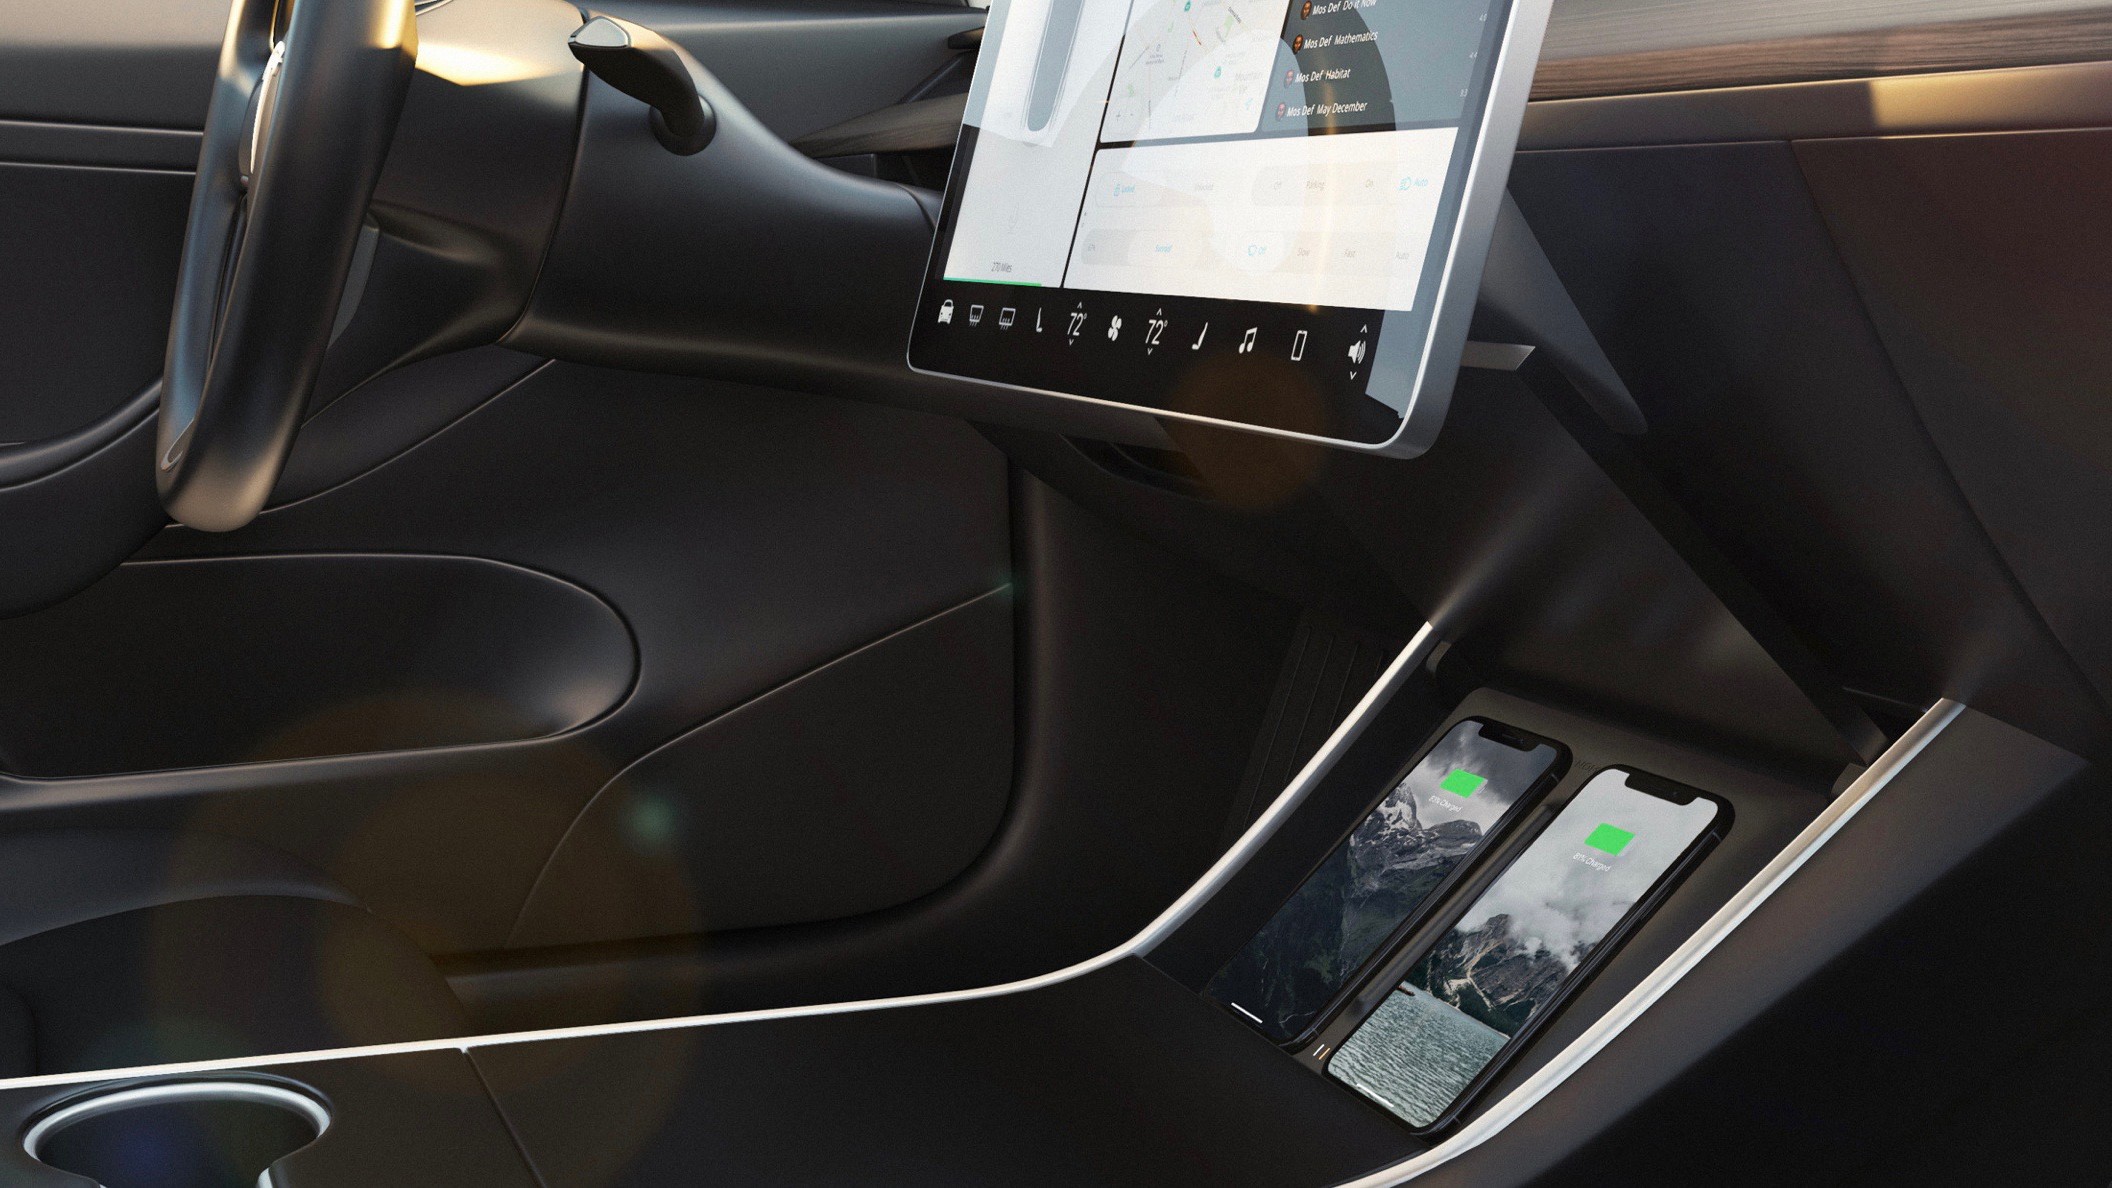 Сторонний аксессуар добавит беспроводную зарядку в Tesla Model 3